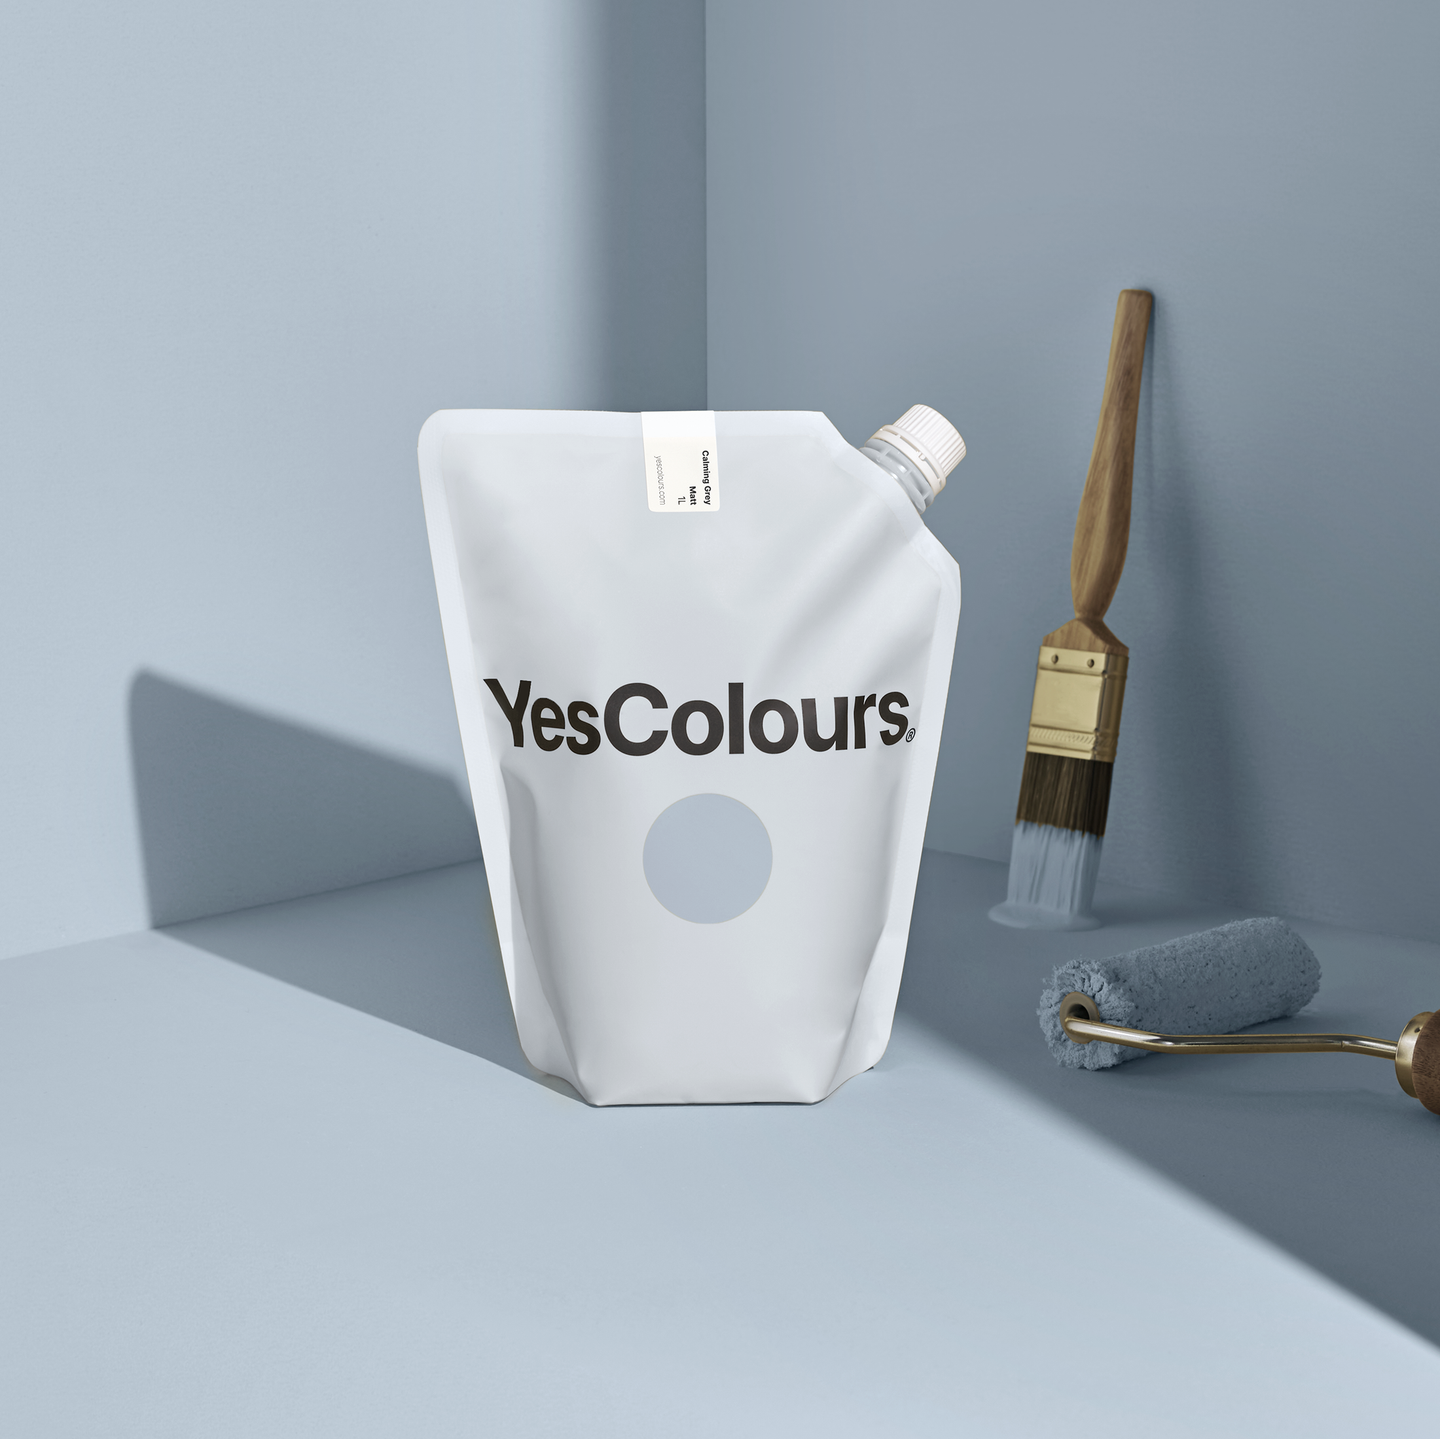 YesColours premium Calming Grey matt emulsion paint